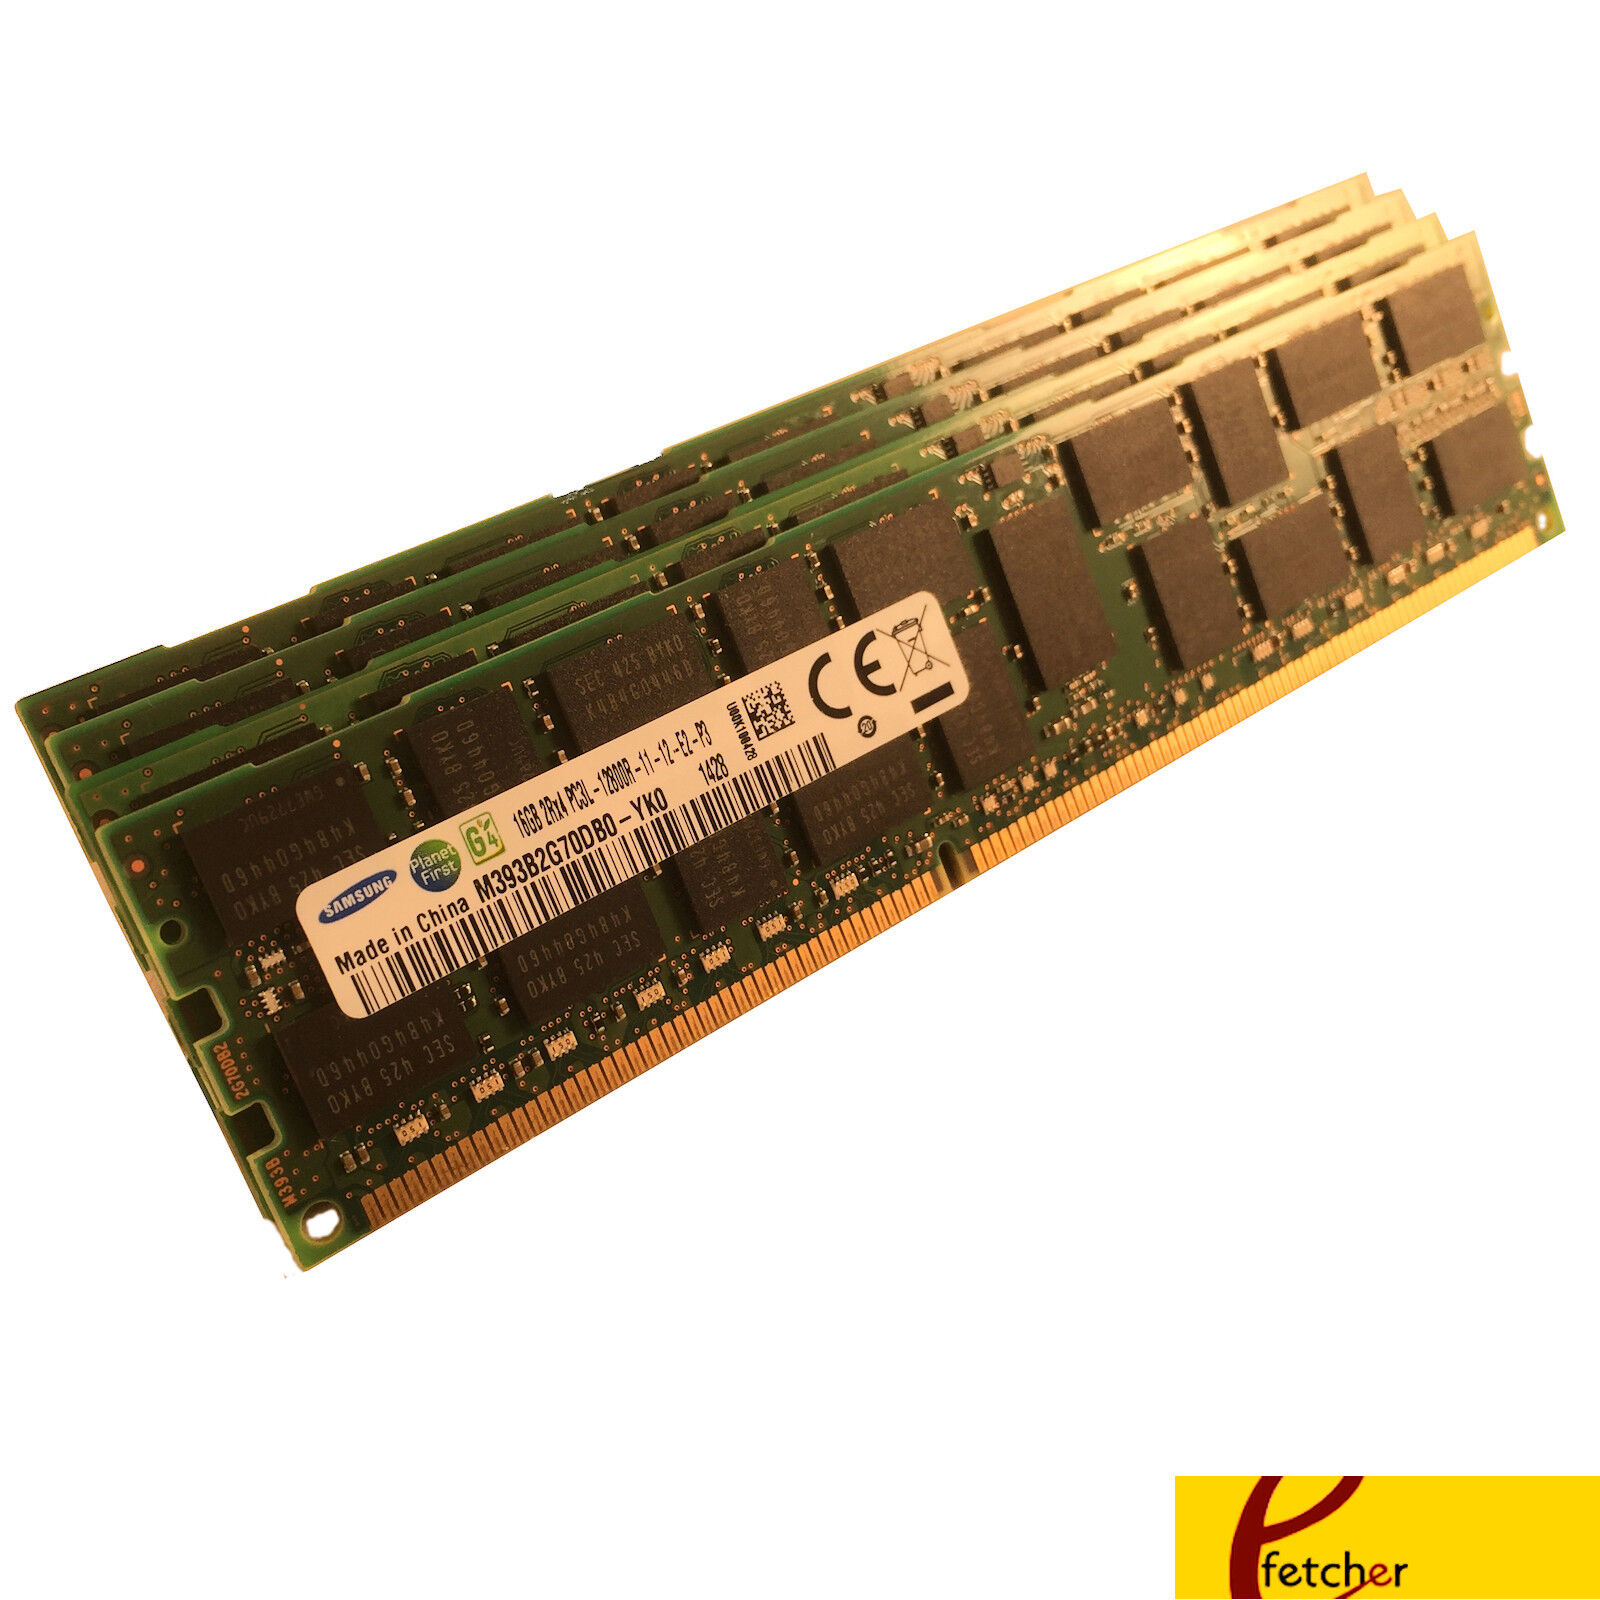 64GB (4 x 16GB) PC3-12800R DDR3 1600 ECC Reg Server Memory RAM RDIMM Upgrade 